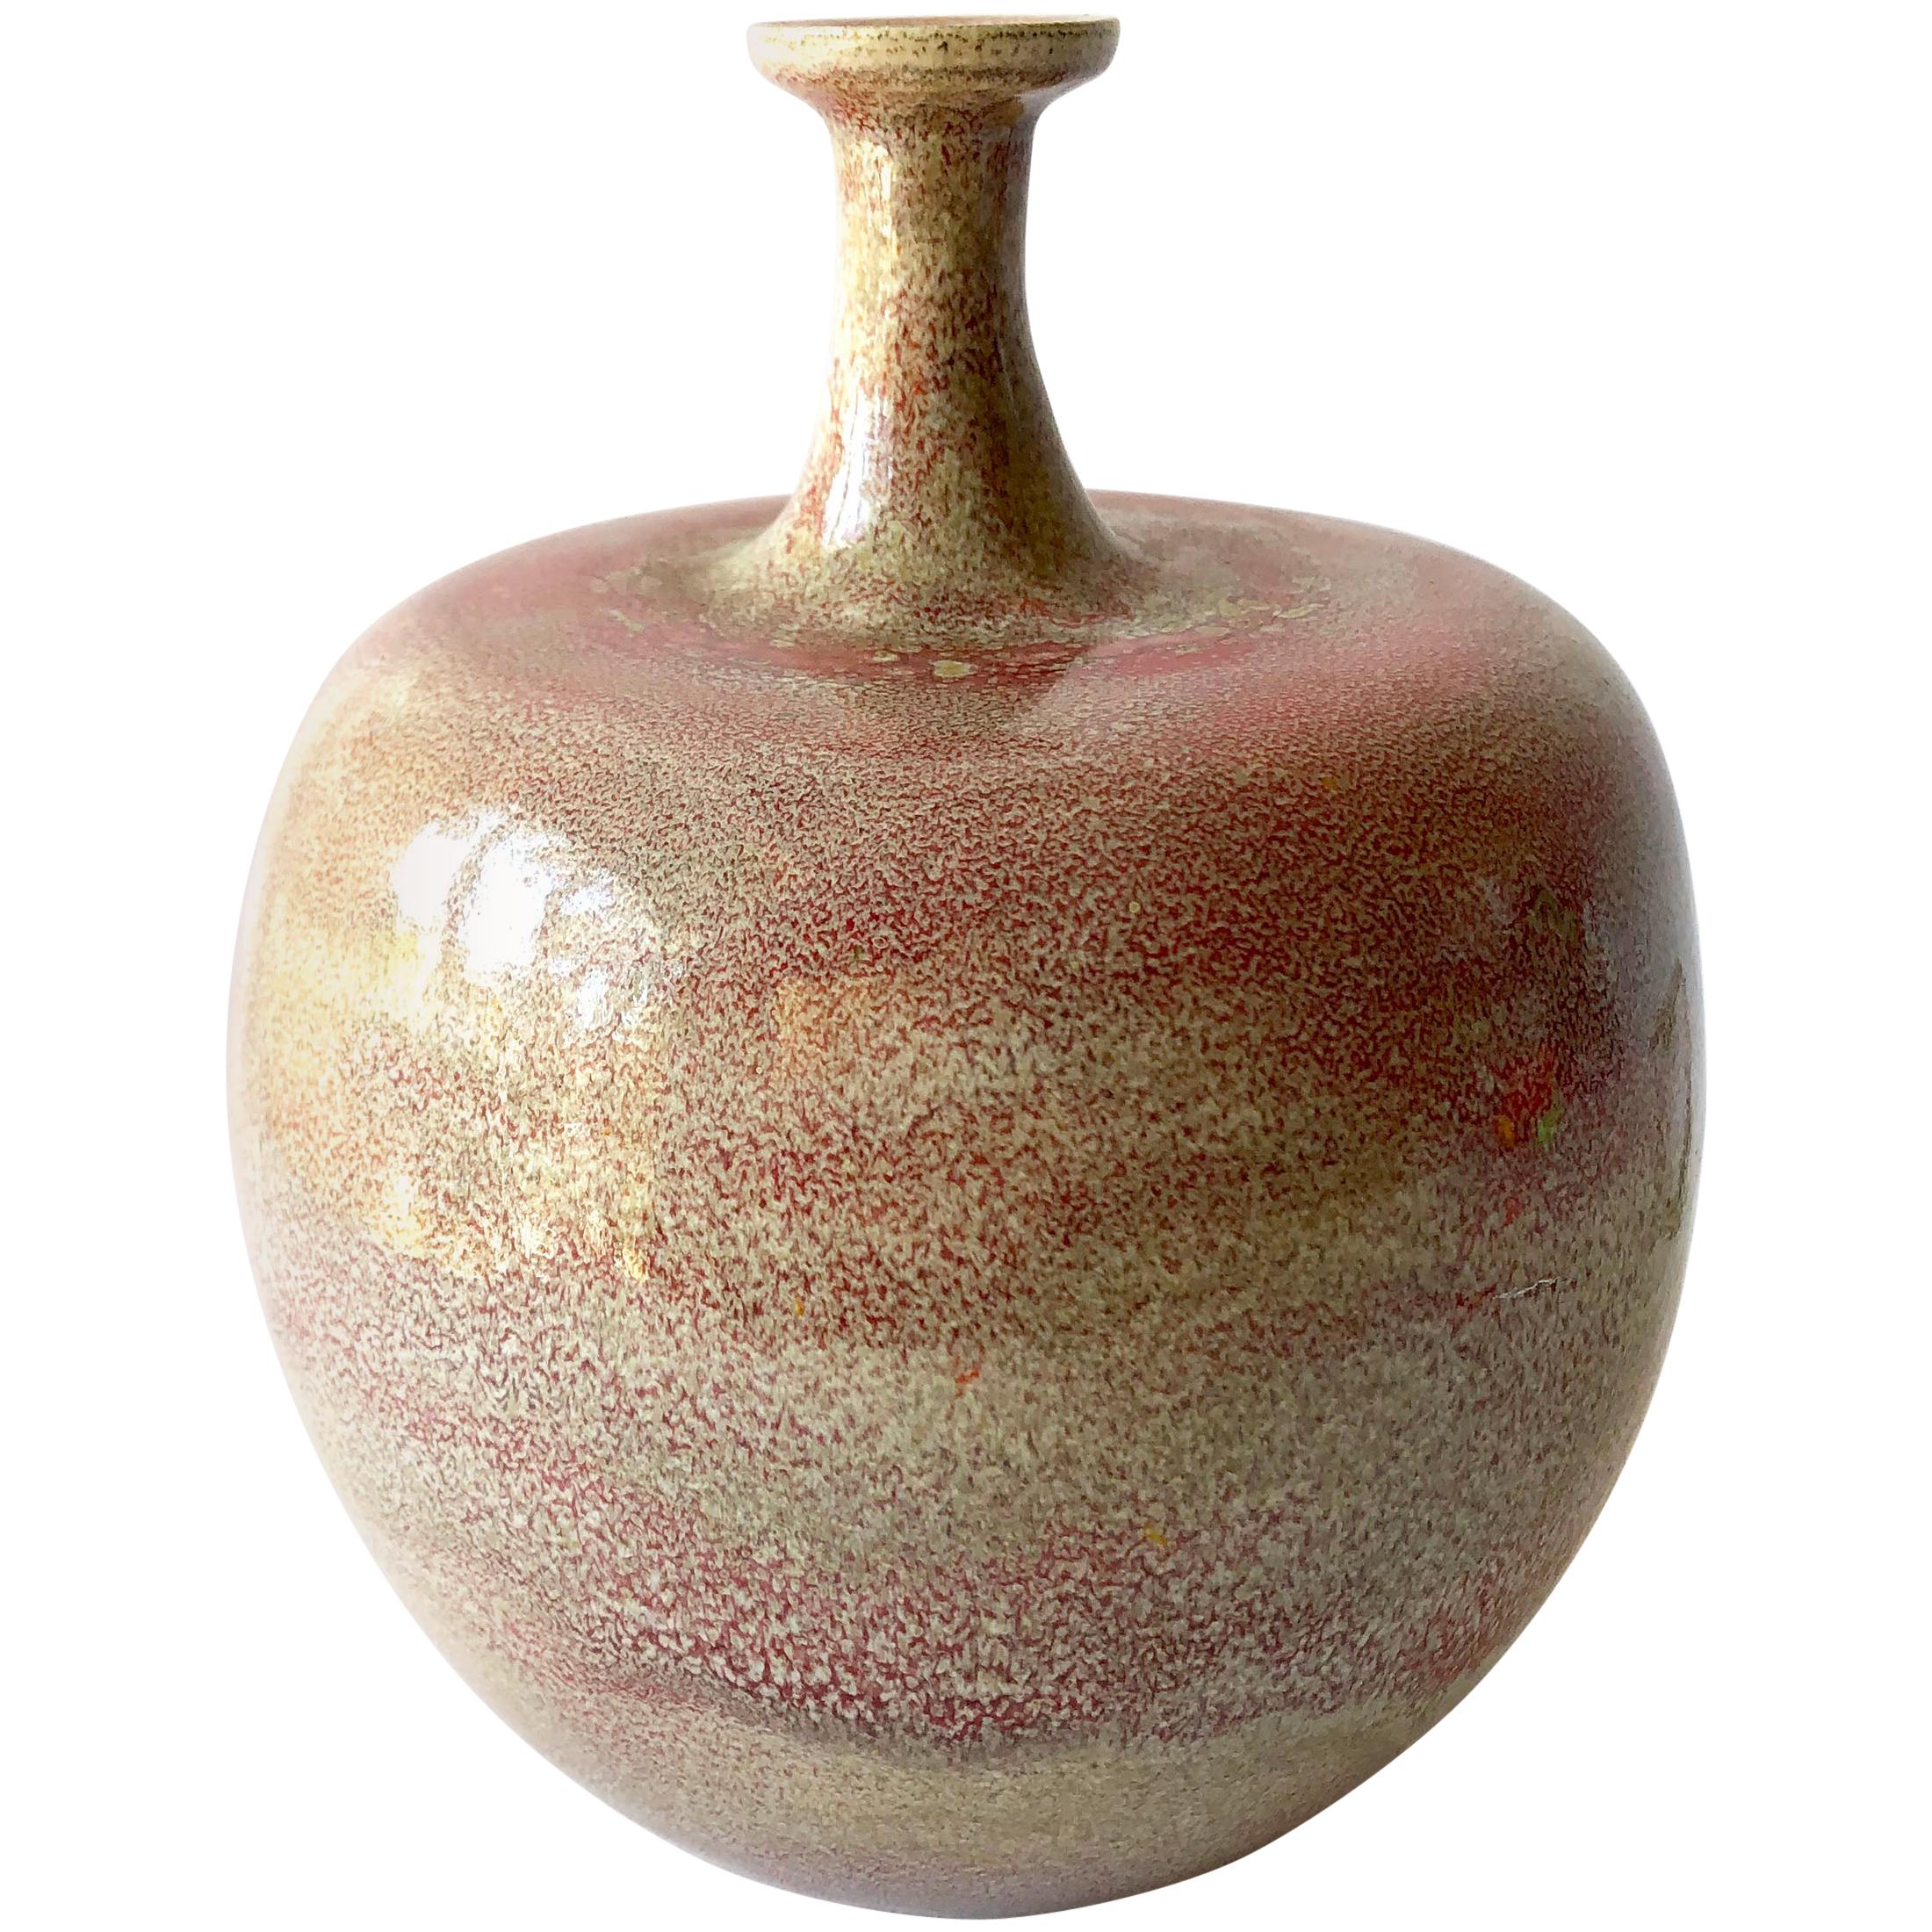 California studio pottery bud vase created by William and Polia Pillin, circa 1960's. Vase measures 9